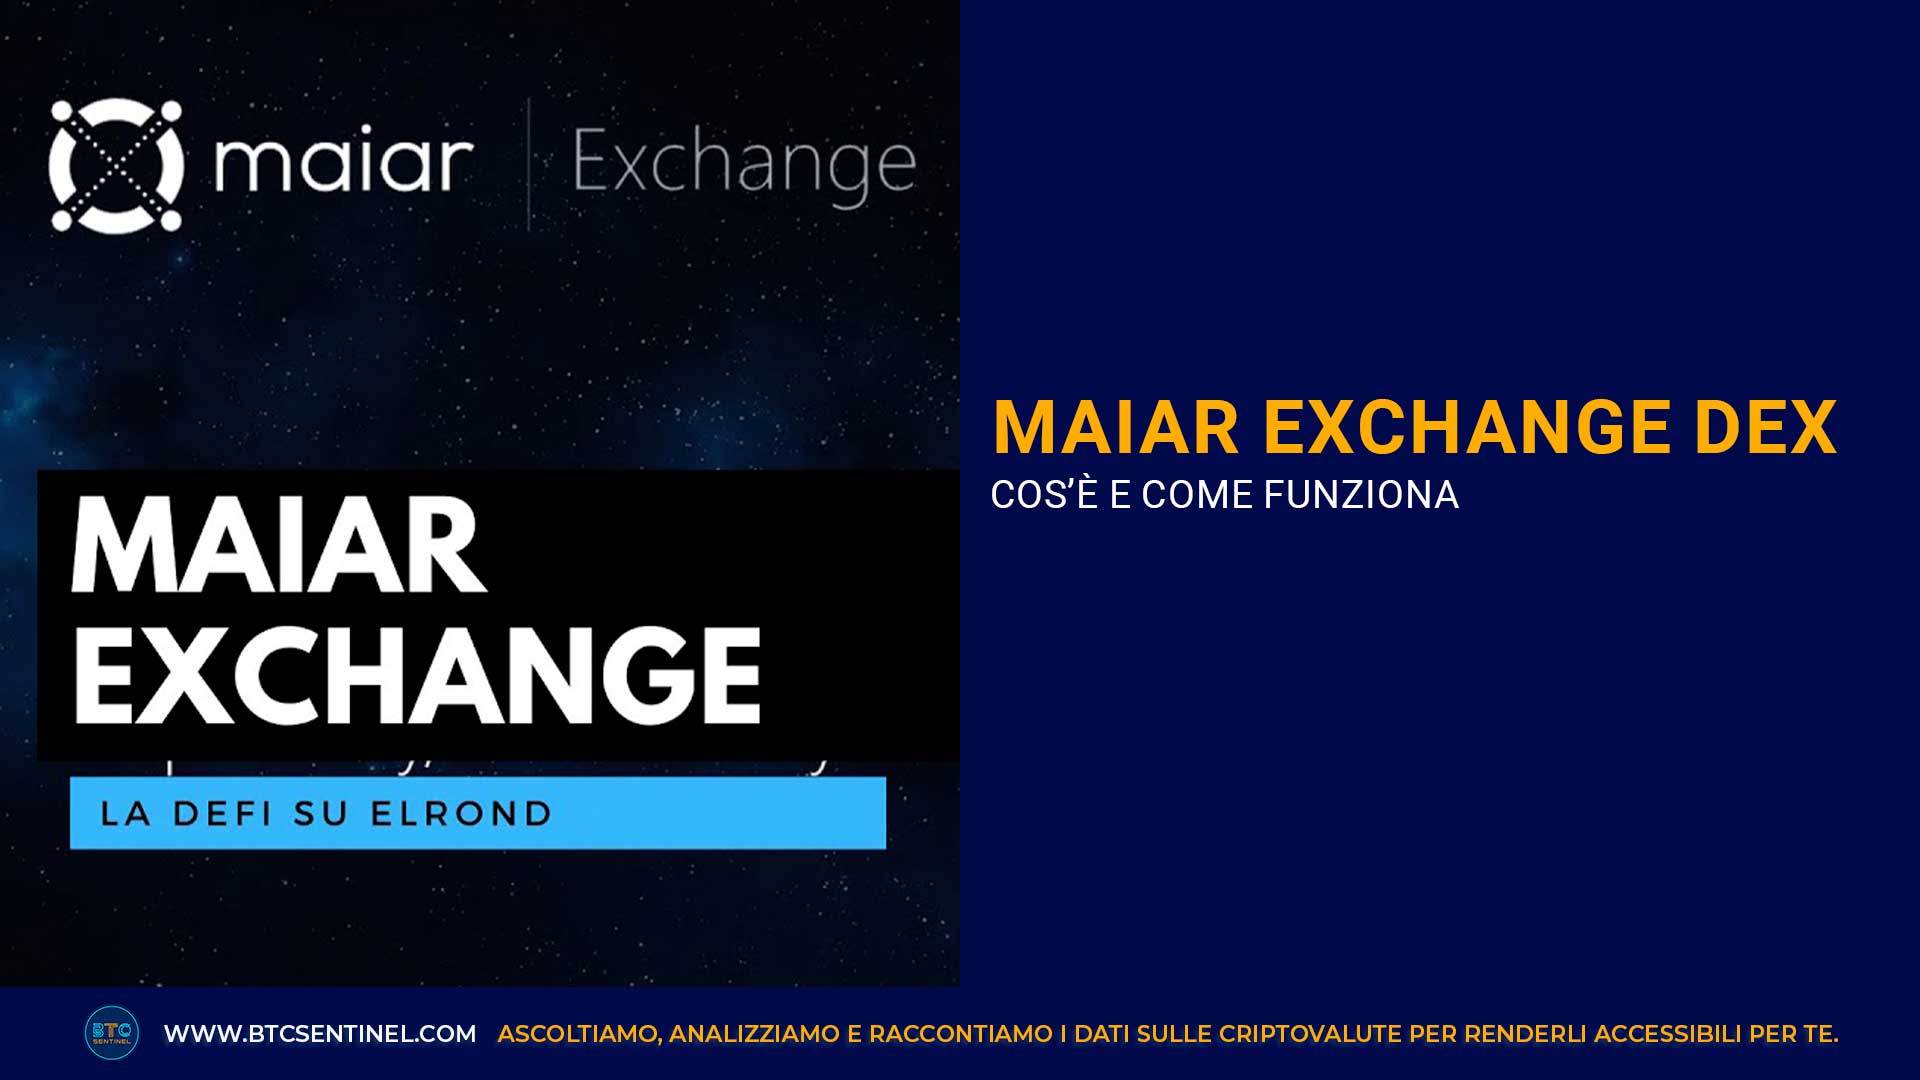 Maiar Exchange: cos'è e come funziona l'exchange DEX